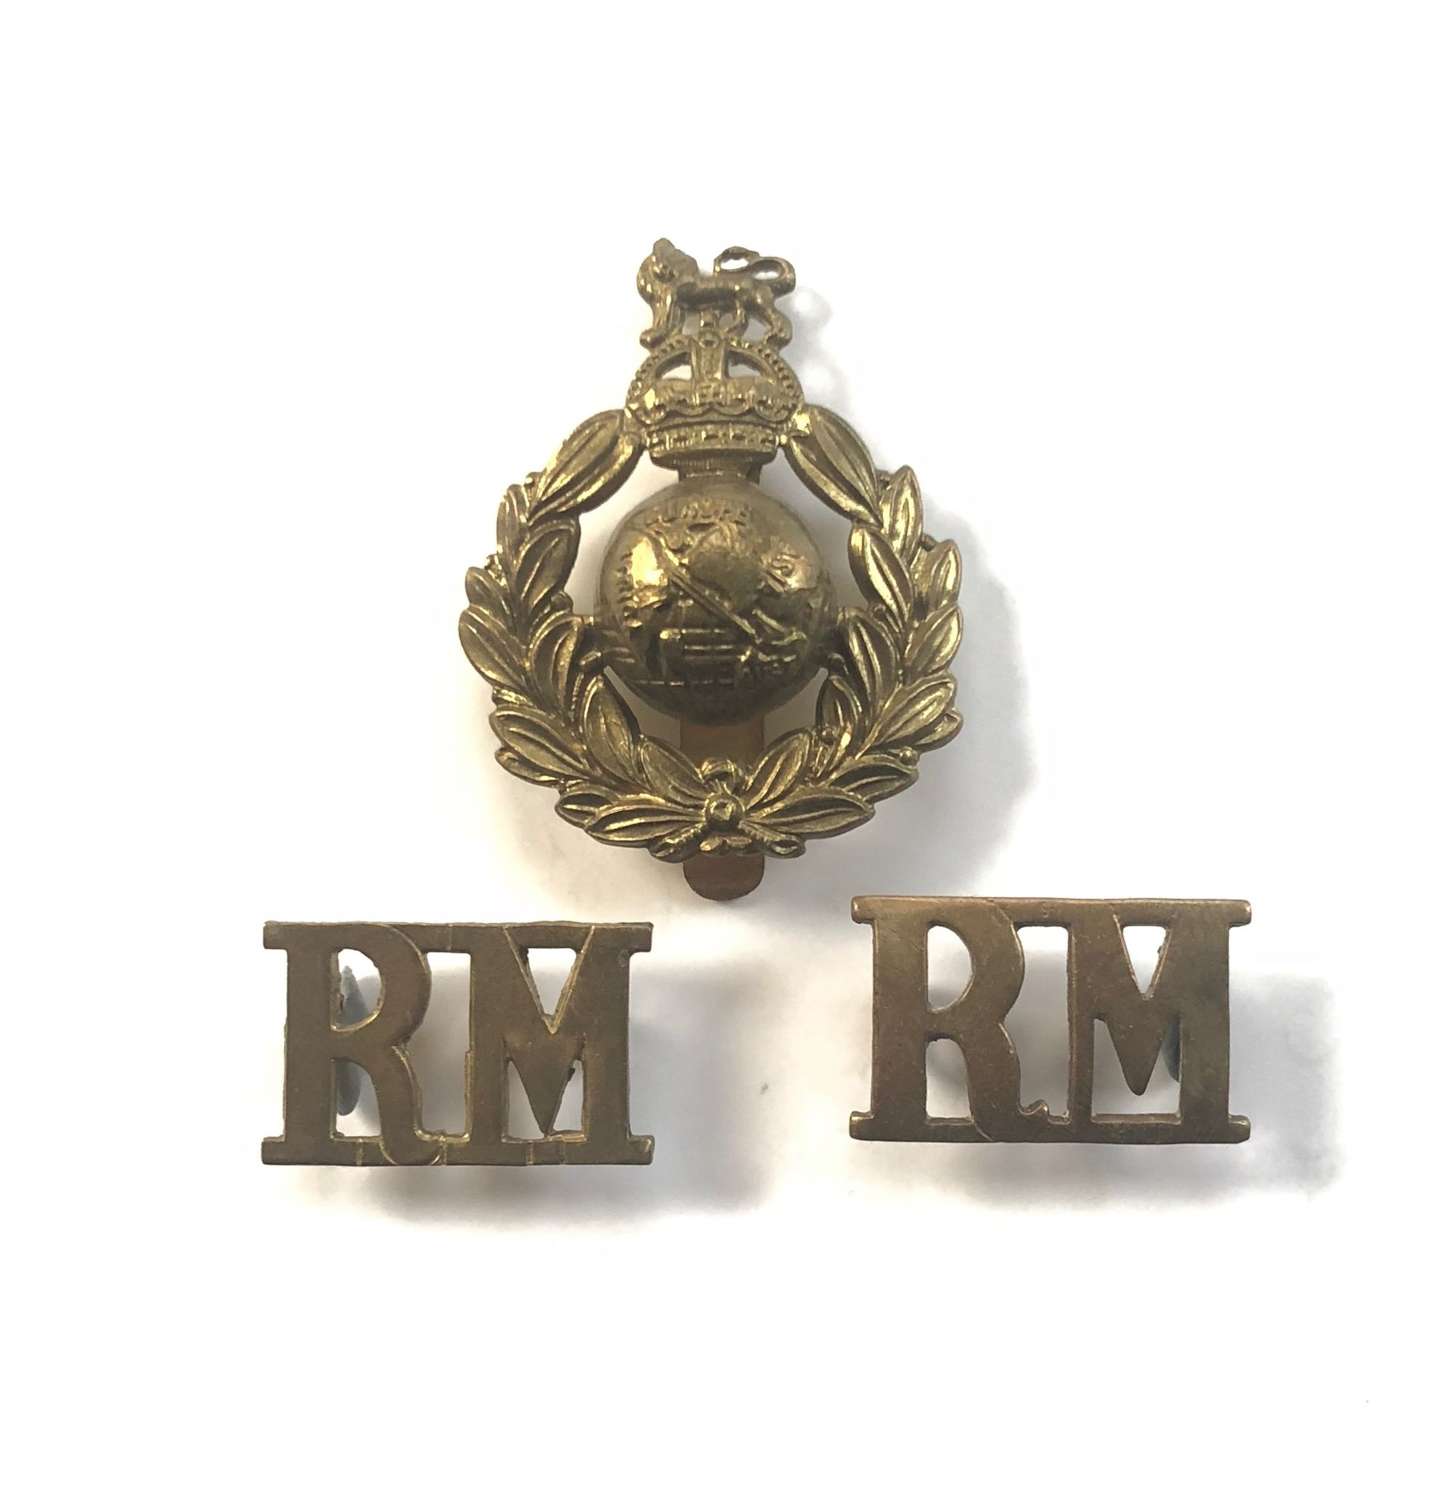 Royal Marines Cap Badge and Shoulder Titles.